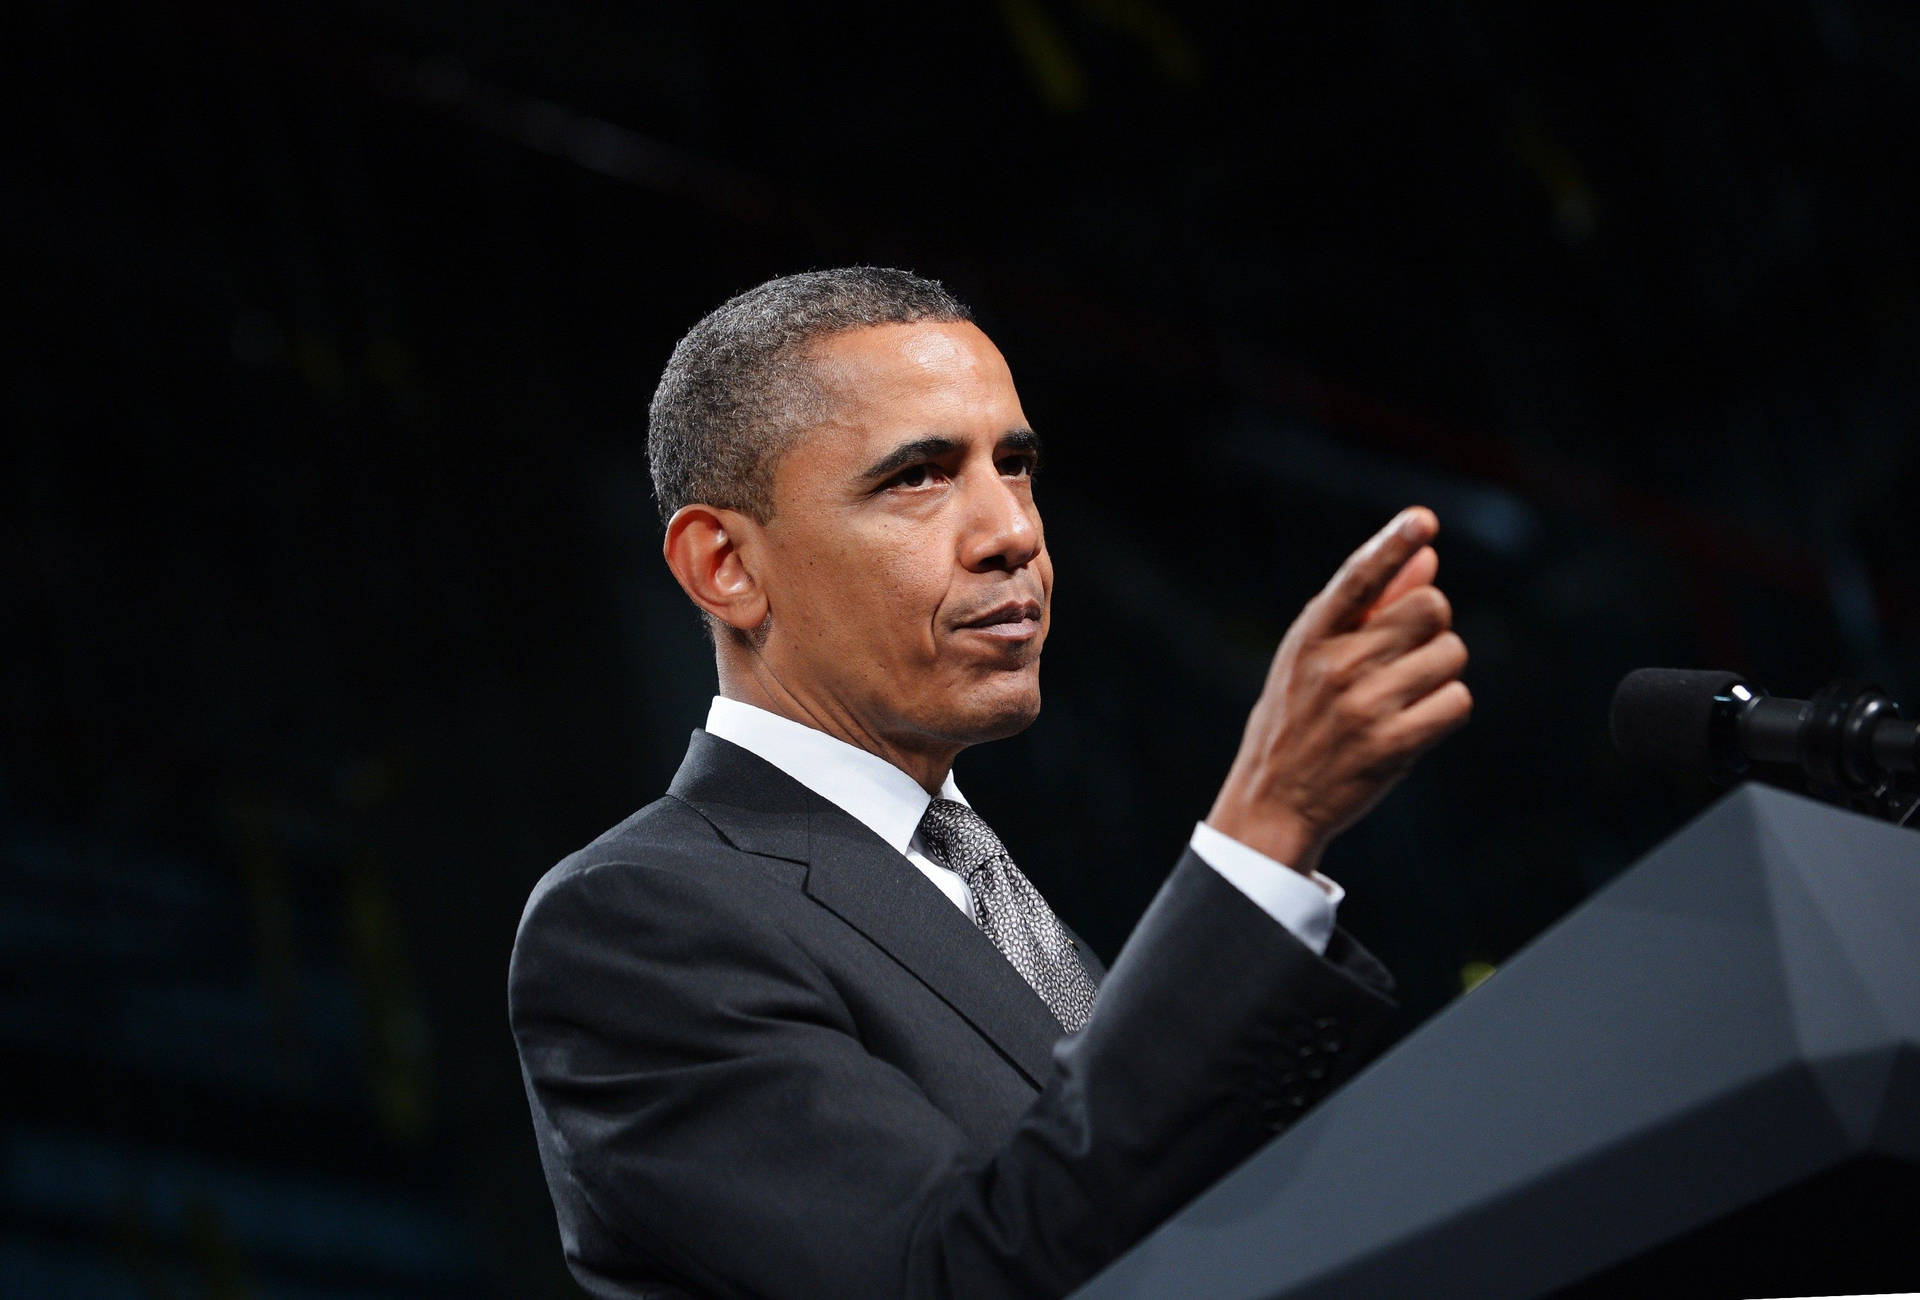 Barack Obama Pointing His Hand